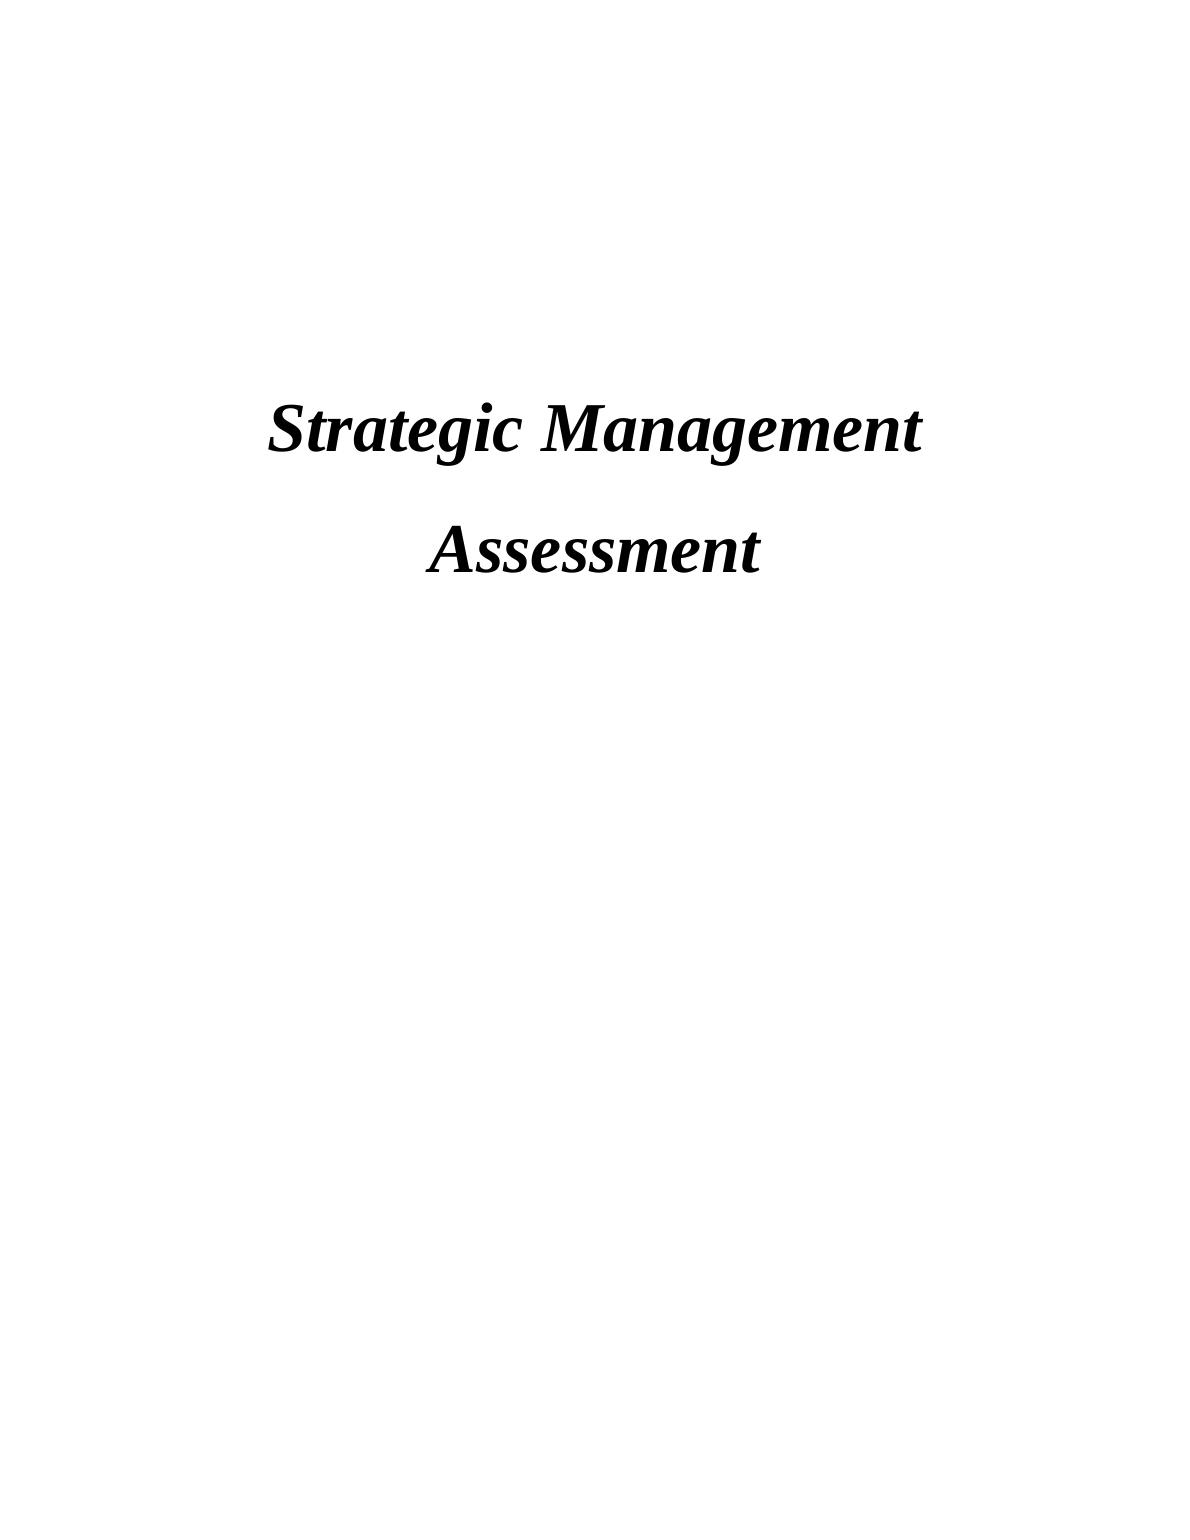 Strategic management analysis - Microsoft Corporation_1